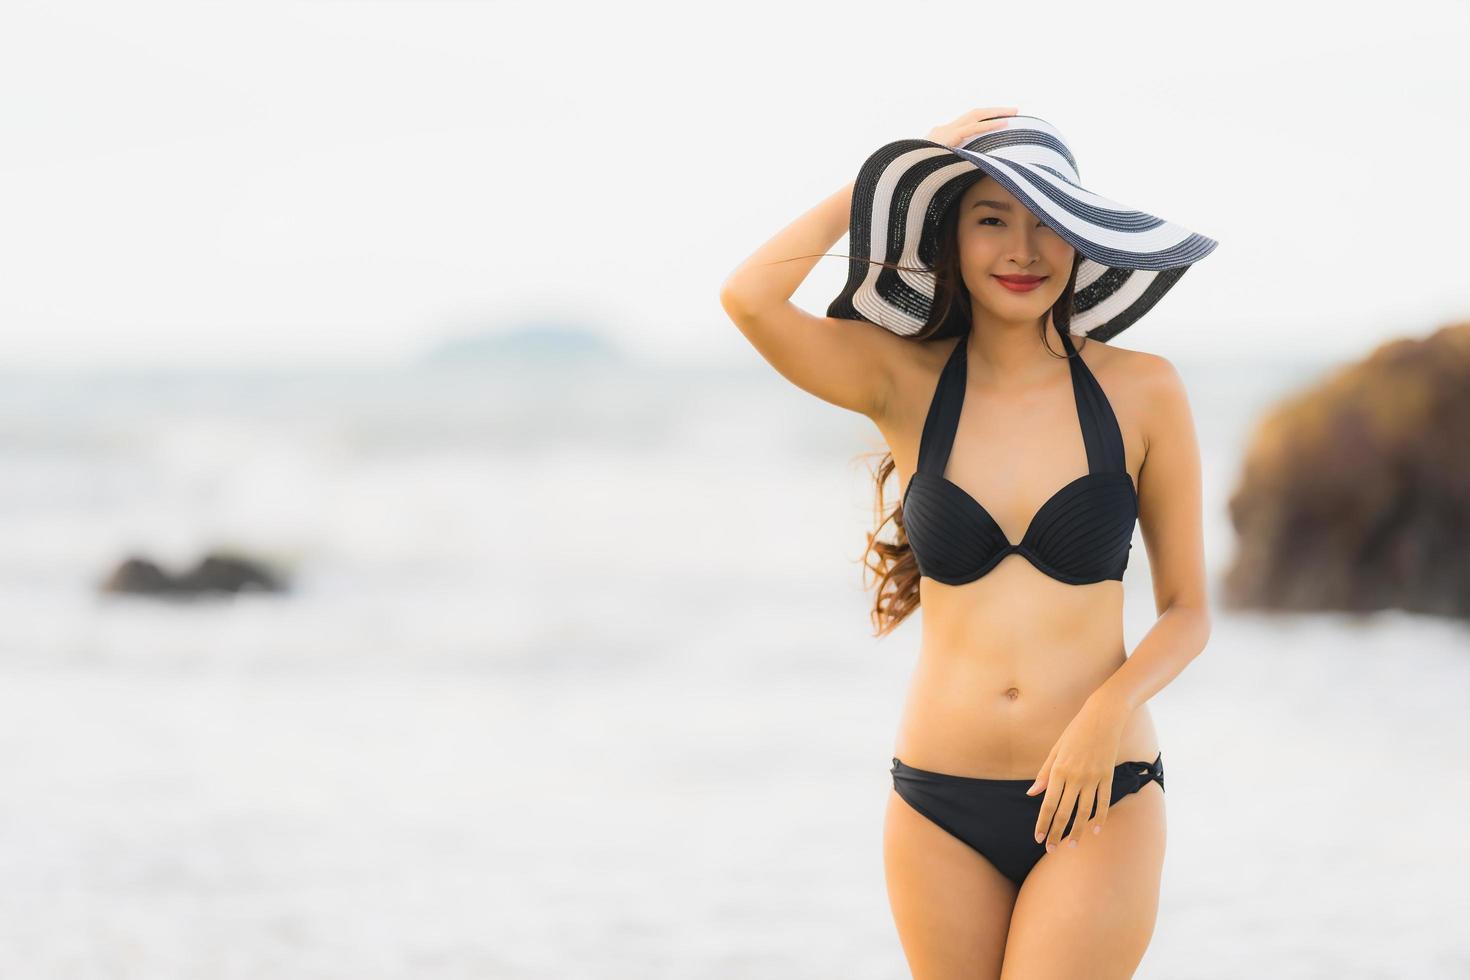 Portrait beautiful young asian woman wear bikini on the beach sea ocean photo